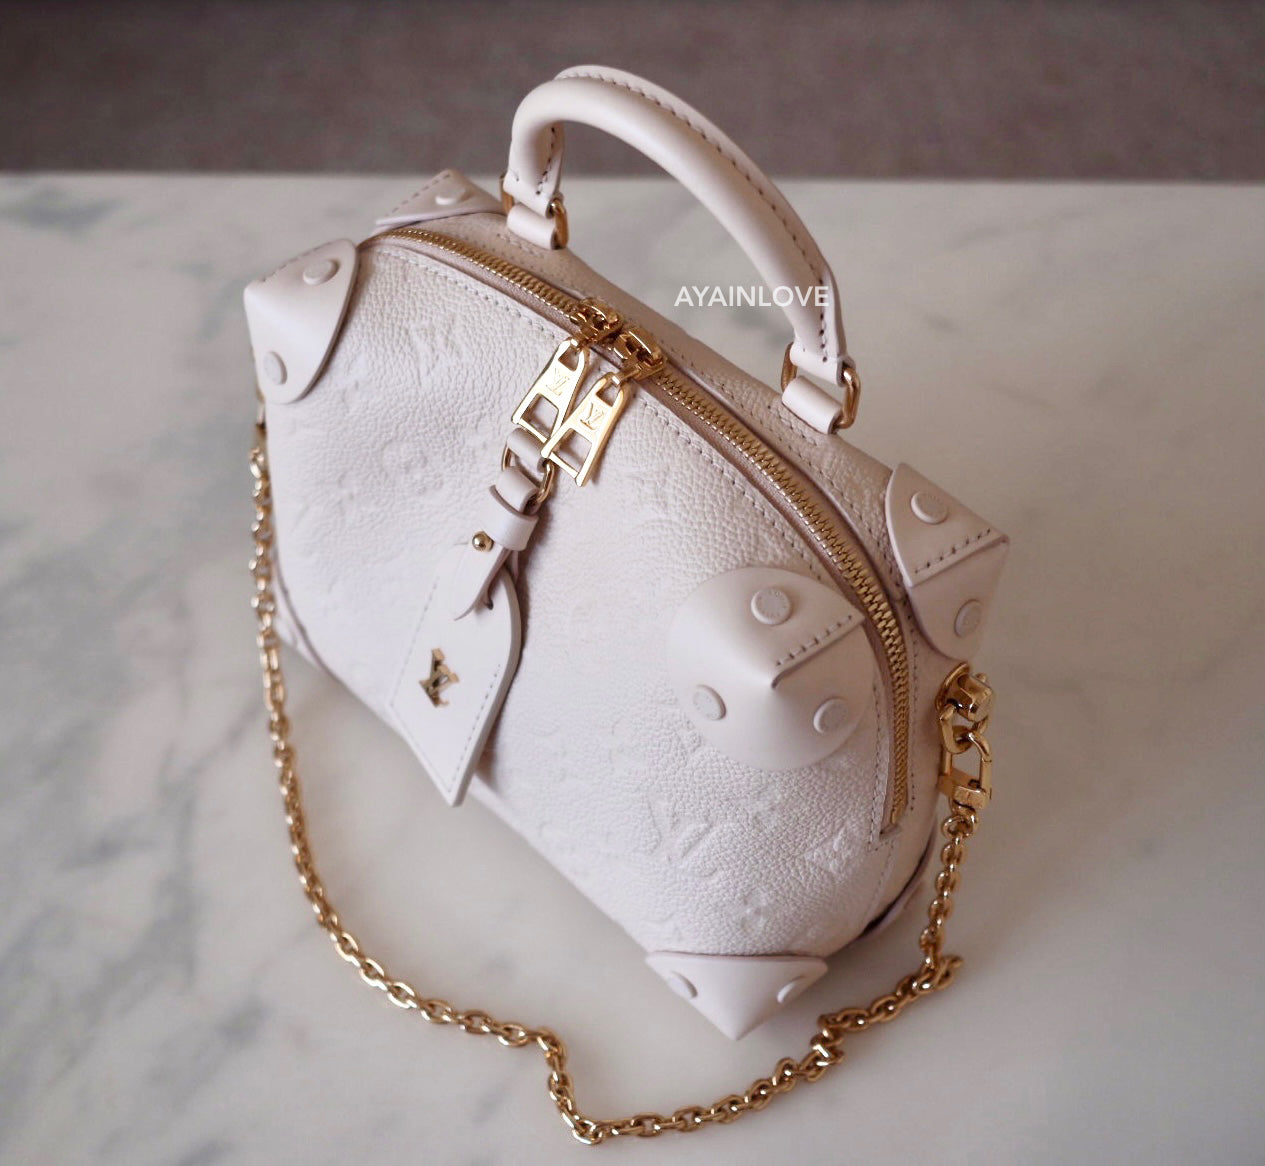 Petite Malle Souple Monogram - Women - Handbags